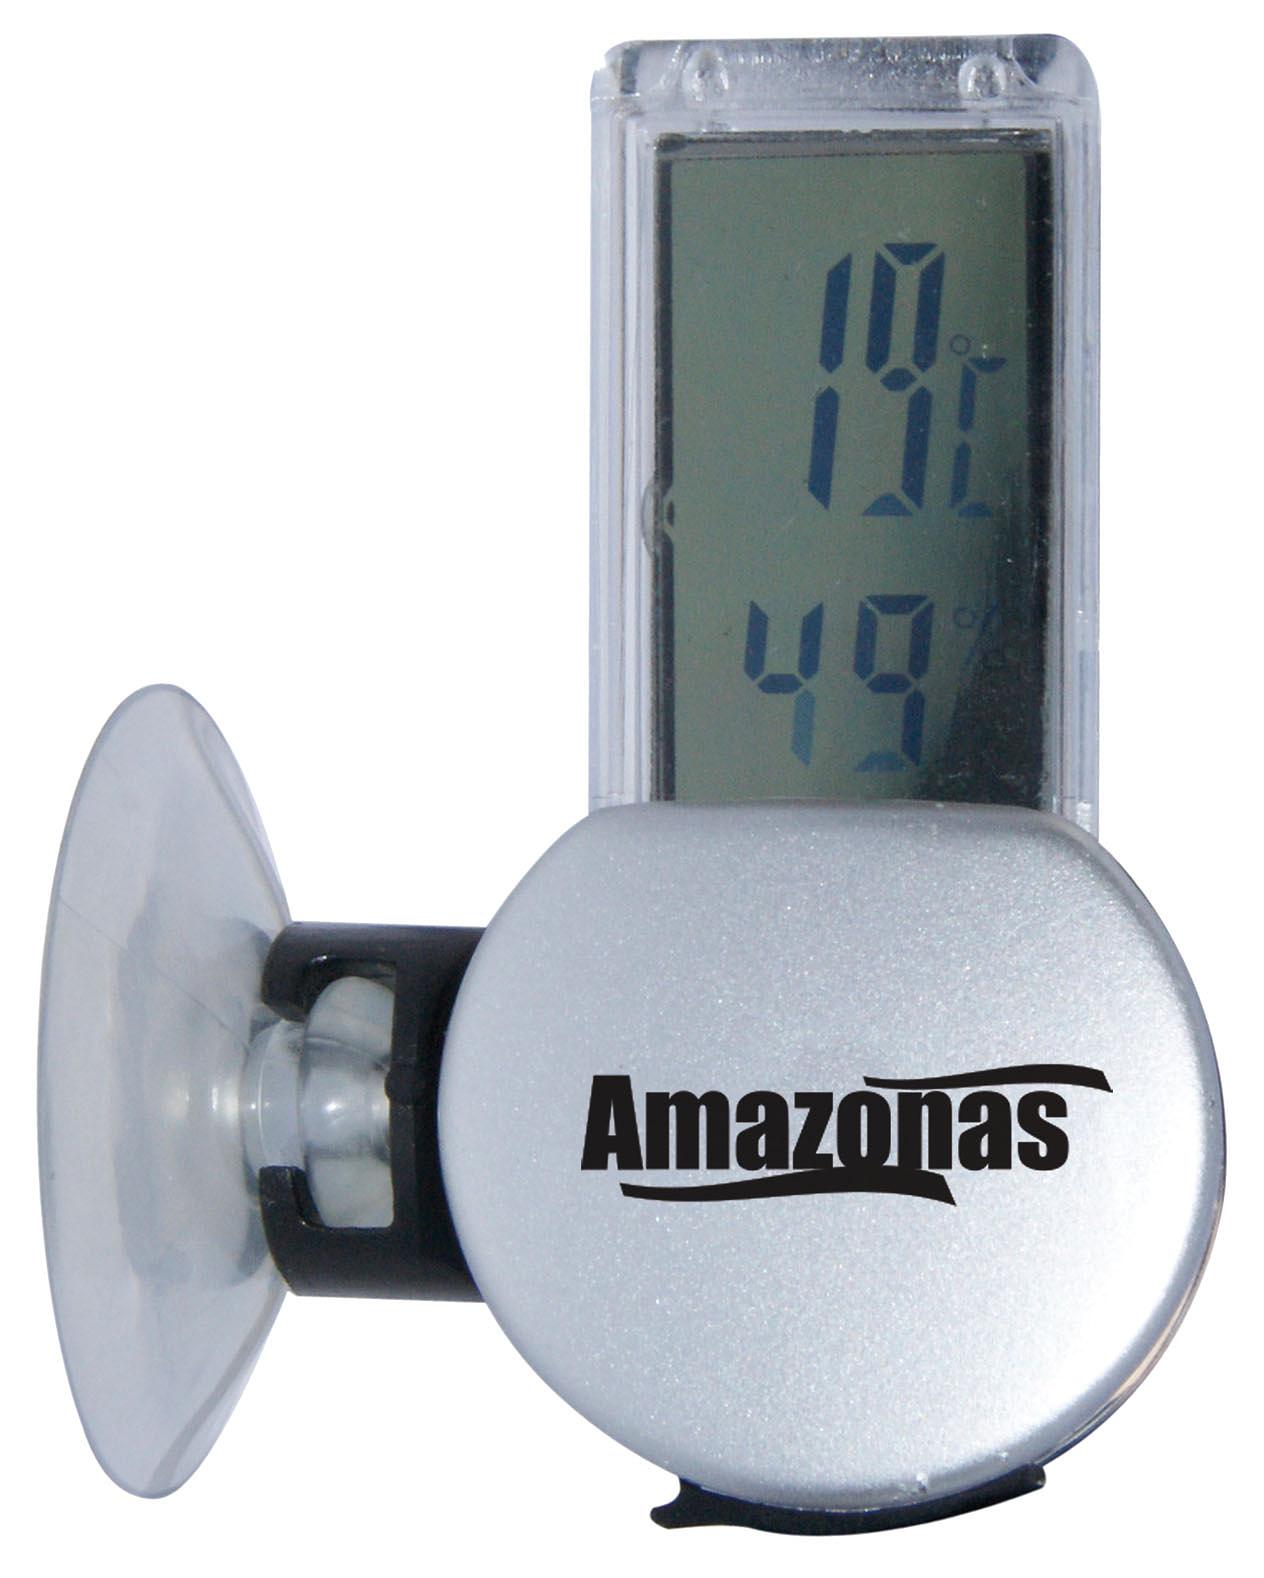 Amazonas Repti Meter Mini, Digital Thermometer